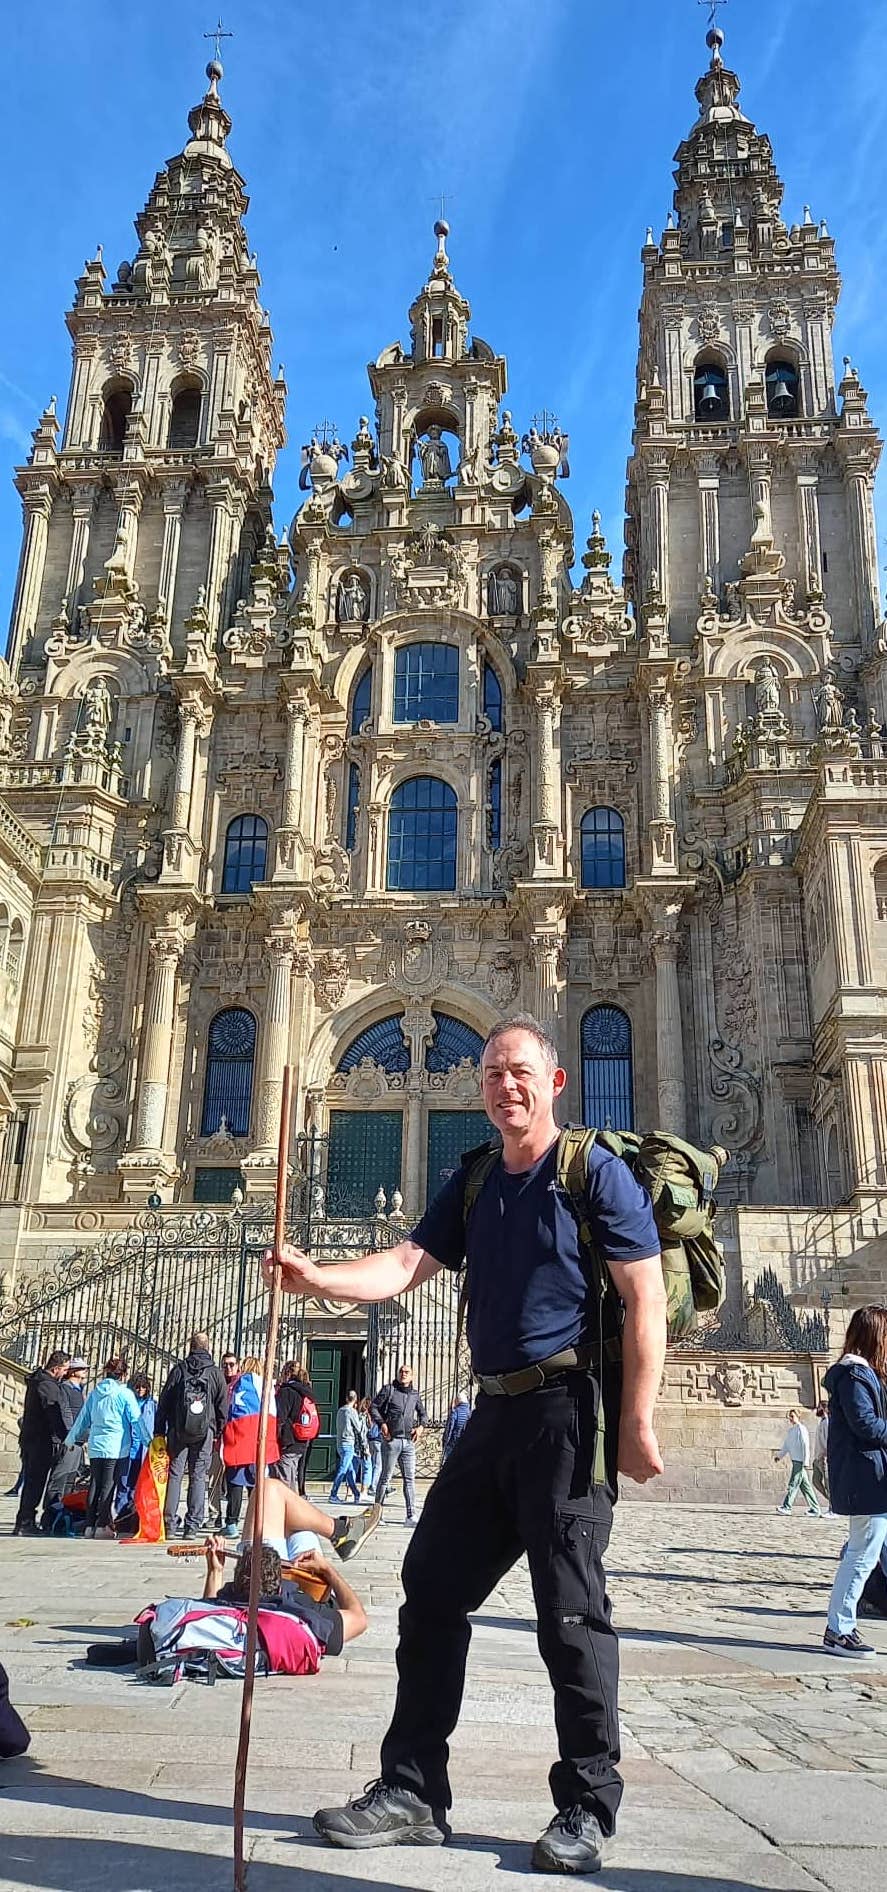 Webb outside the final destination: the Cathedral of Santiago de Compostela